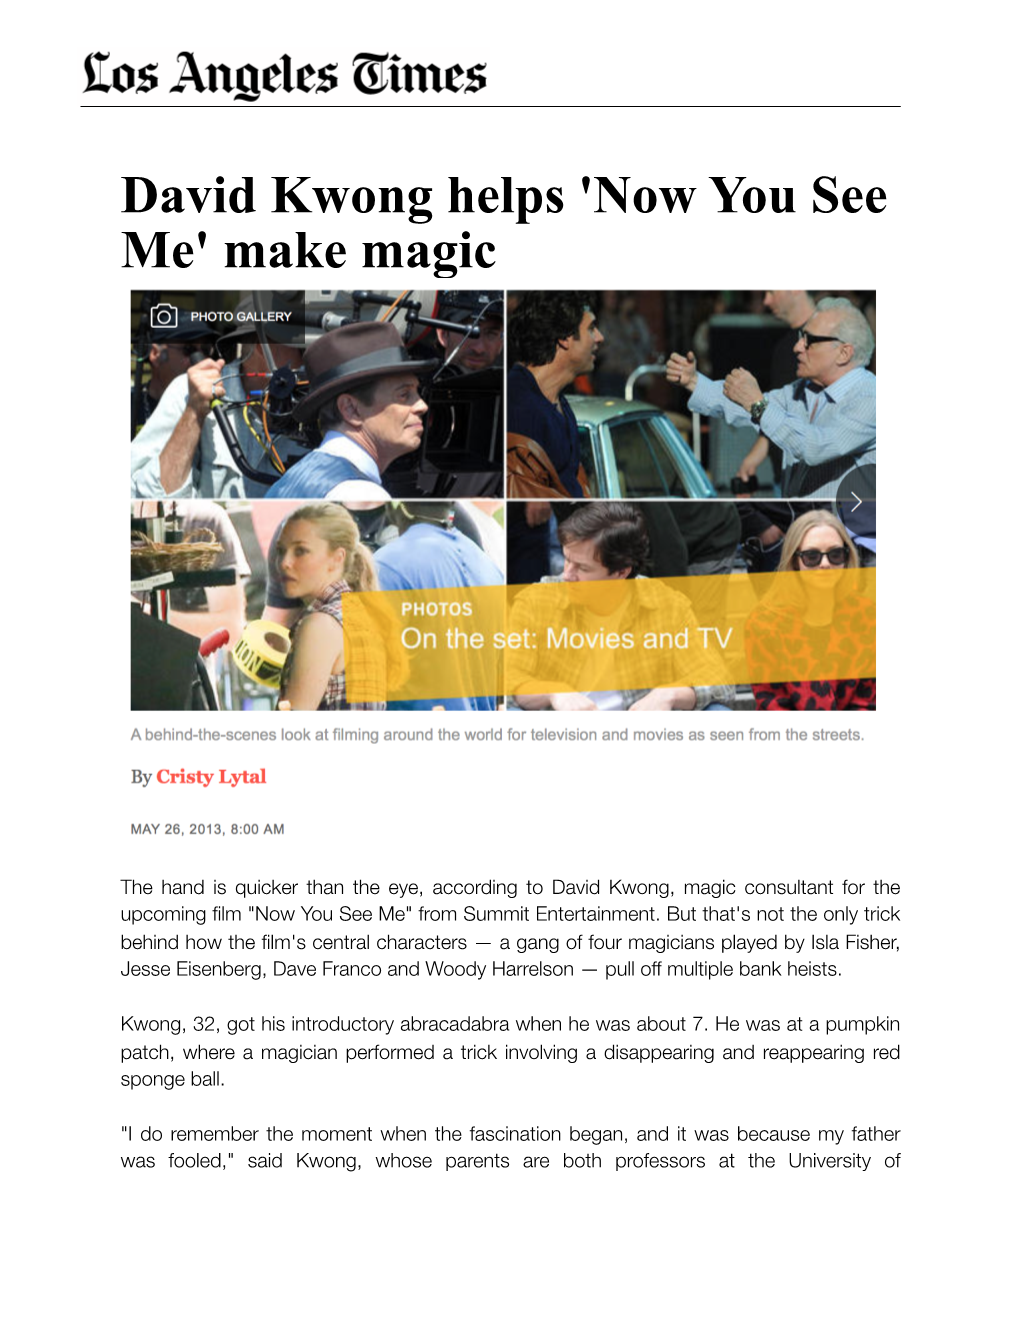 David Kwong Helps 'Now You See Me' Make Magic